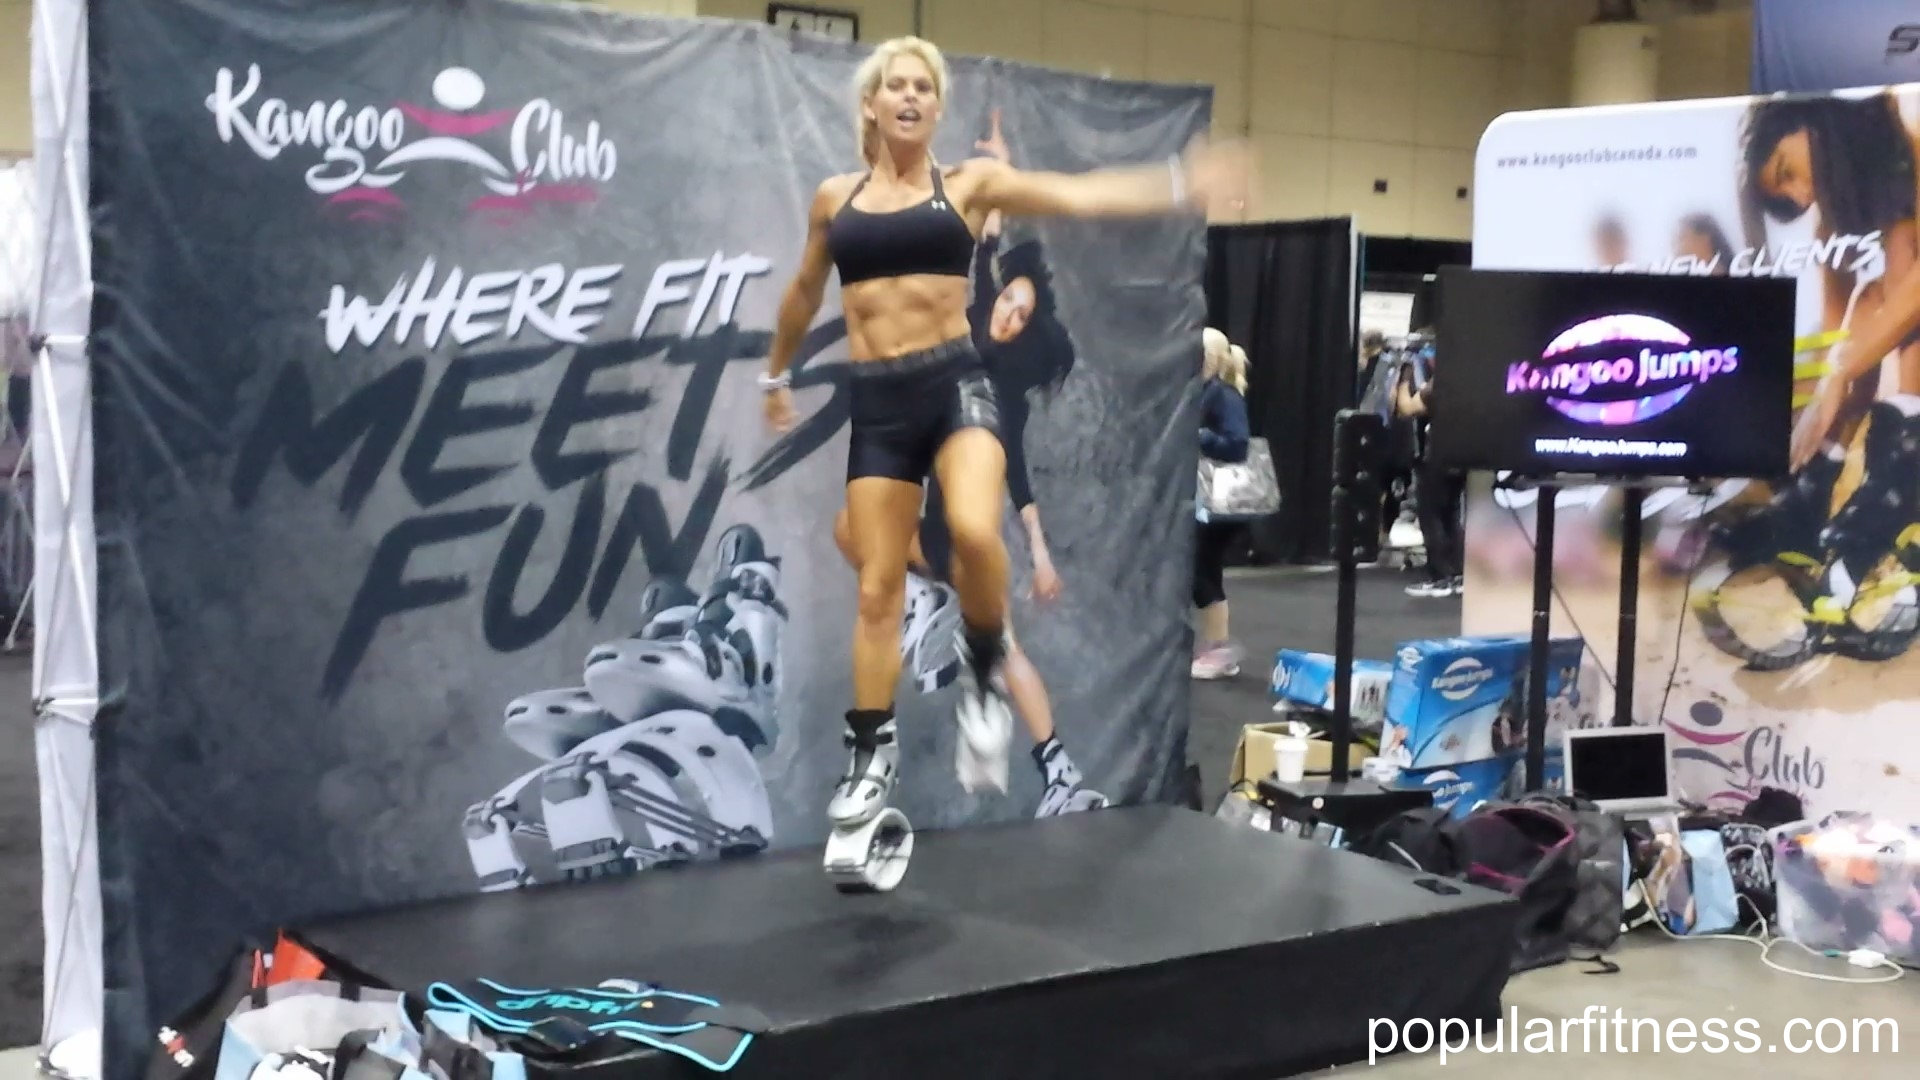 Kangoo Jumps: Jump your way into fun fitness